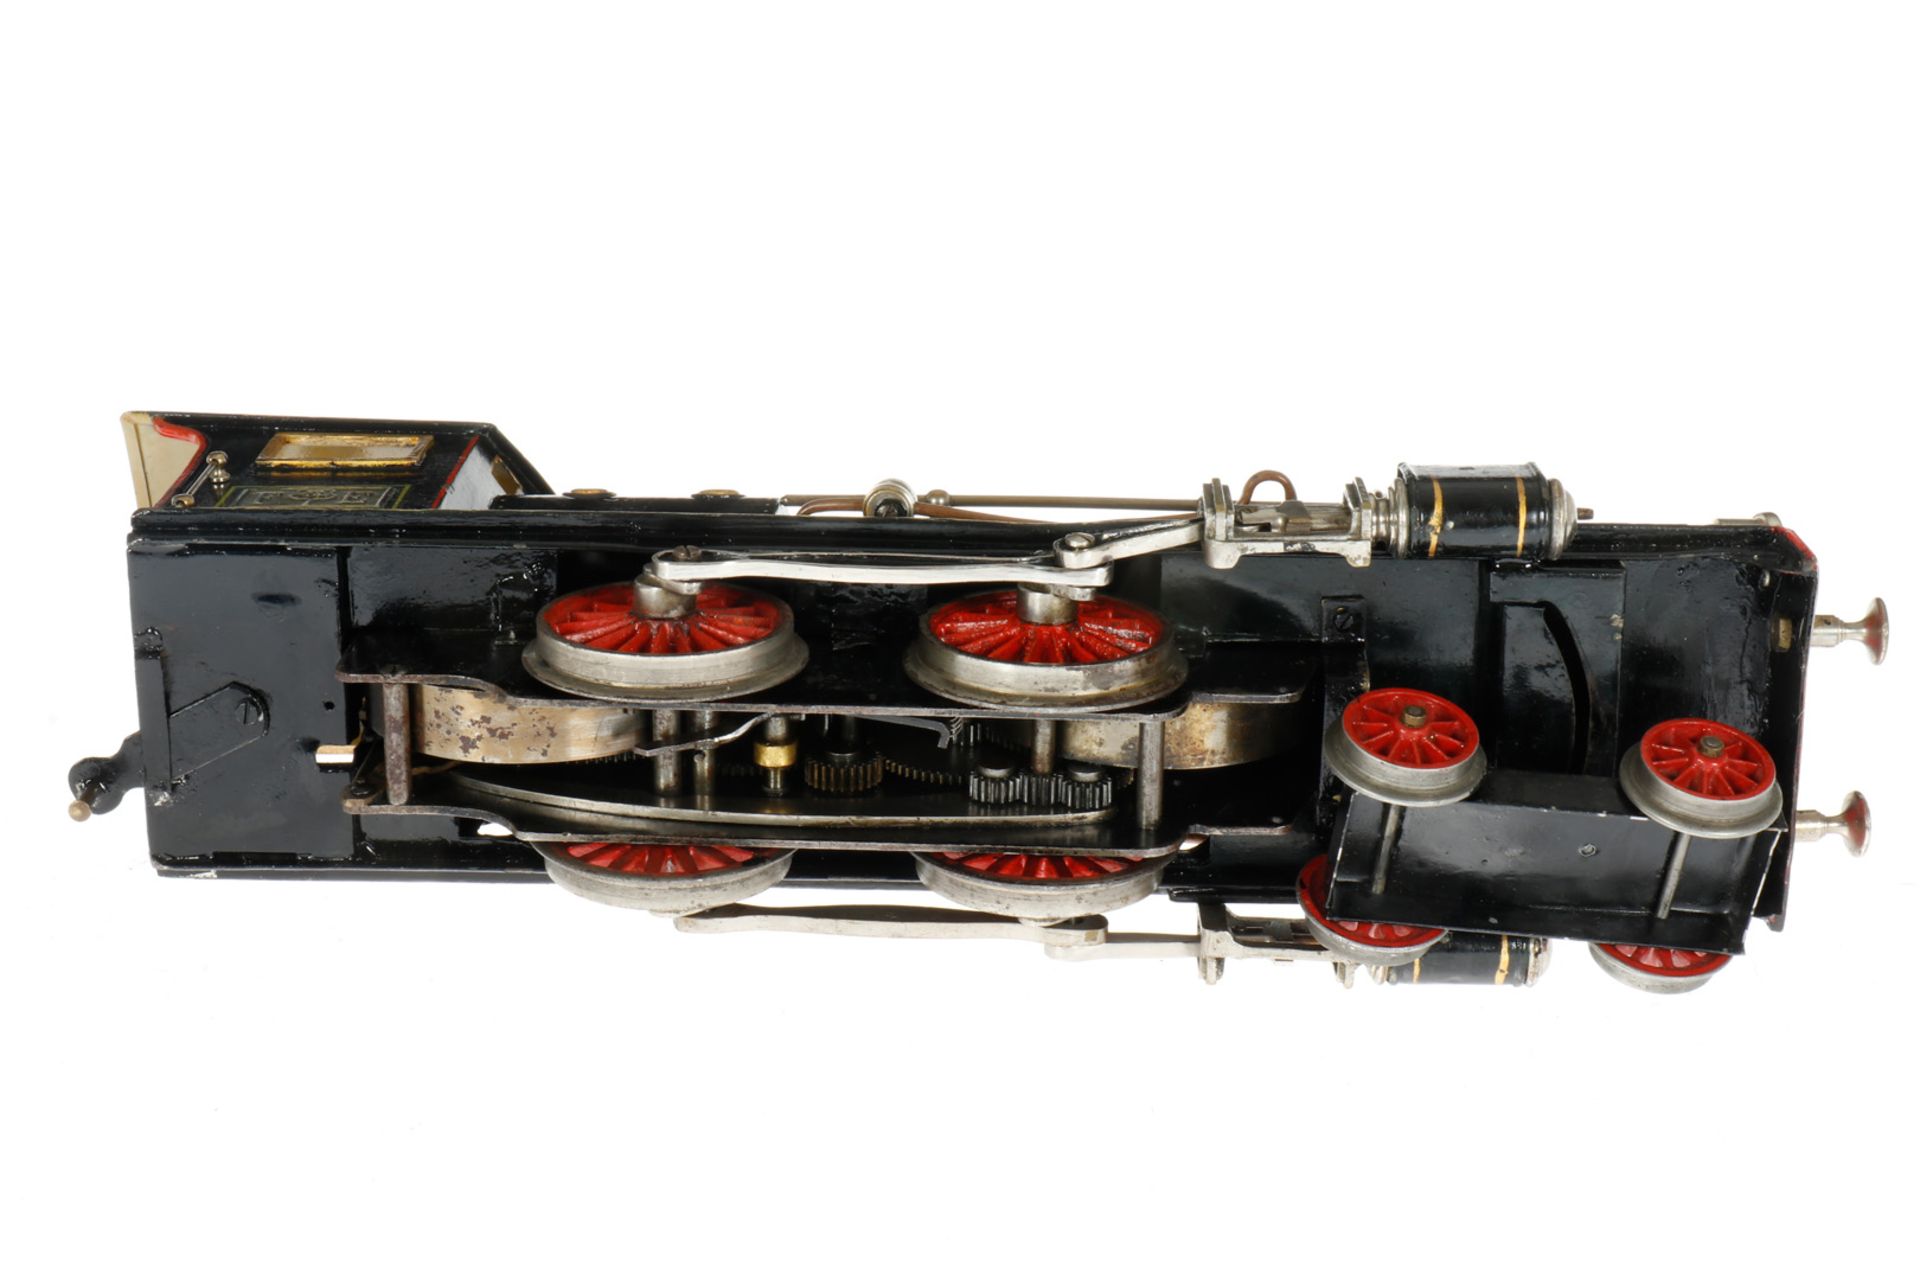 Märklin 2-B Dampflok FE 1021, S 1, uralt, mit Doppel-Uhrwerk, je intakt, schwarz, HL, mit Tender, - Image 4 of 9